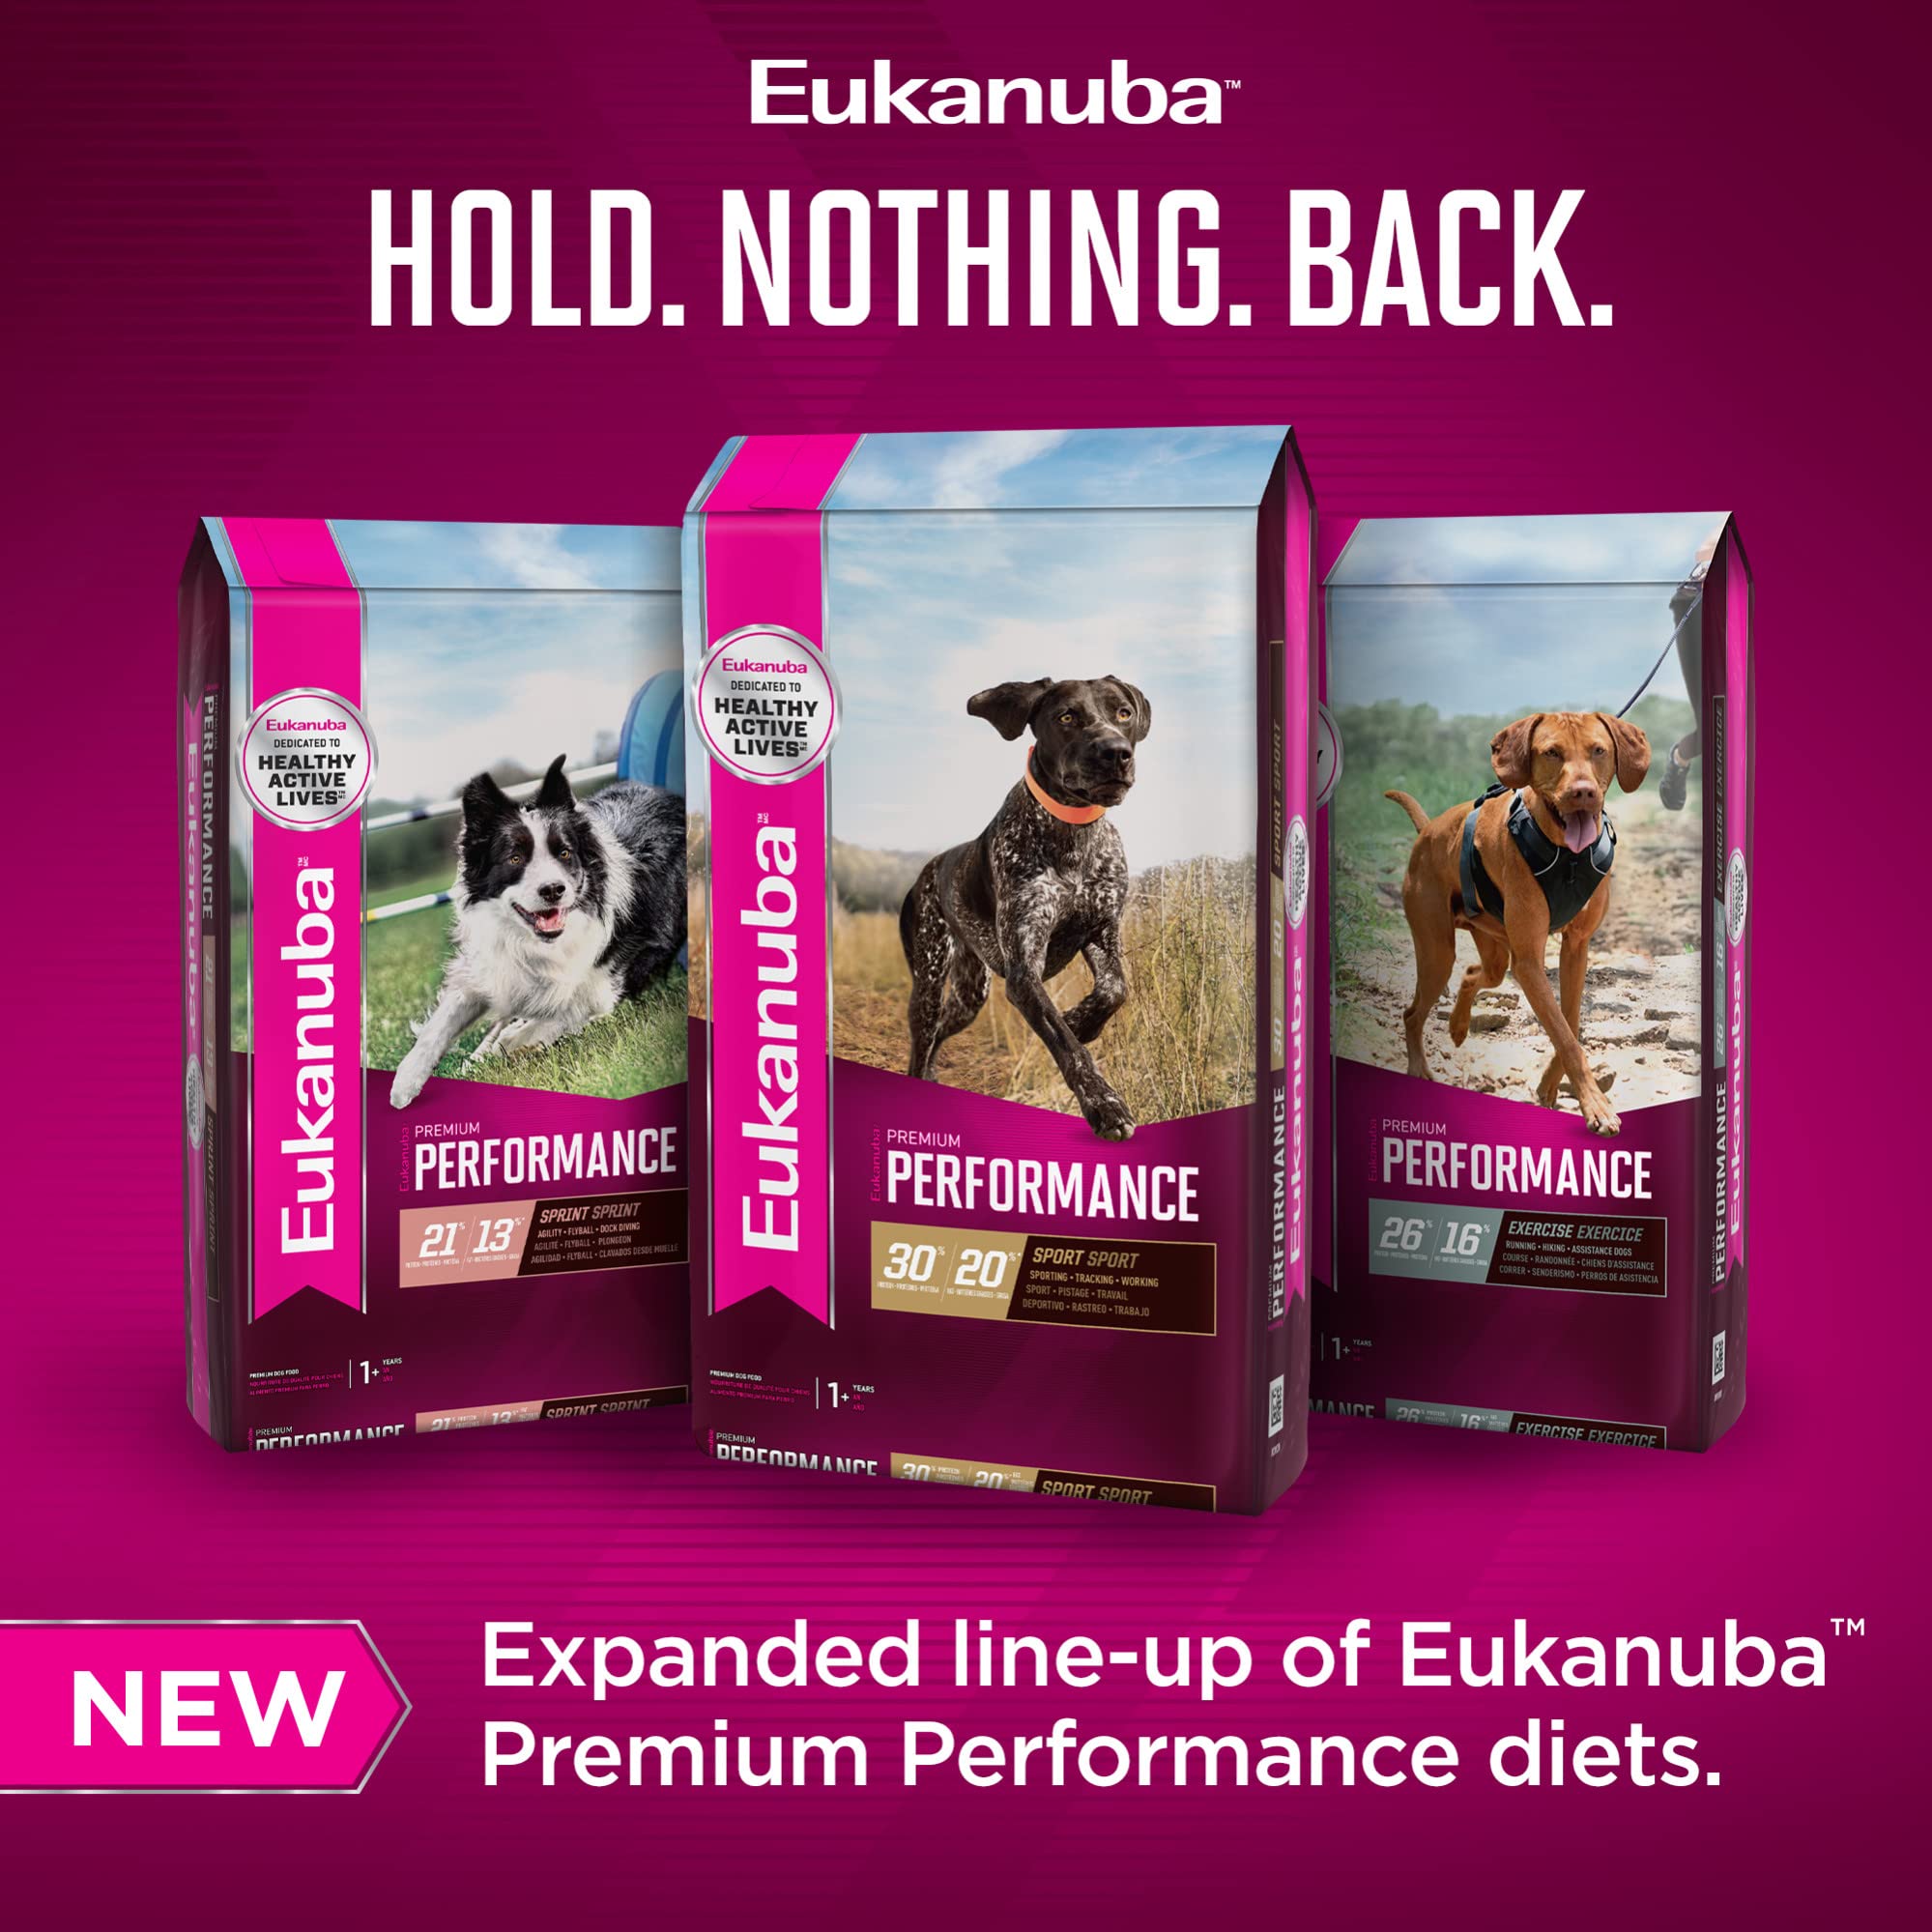 Eukanuba Premium Performance 30/20 Dry Dog Food - 28 Lbs  